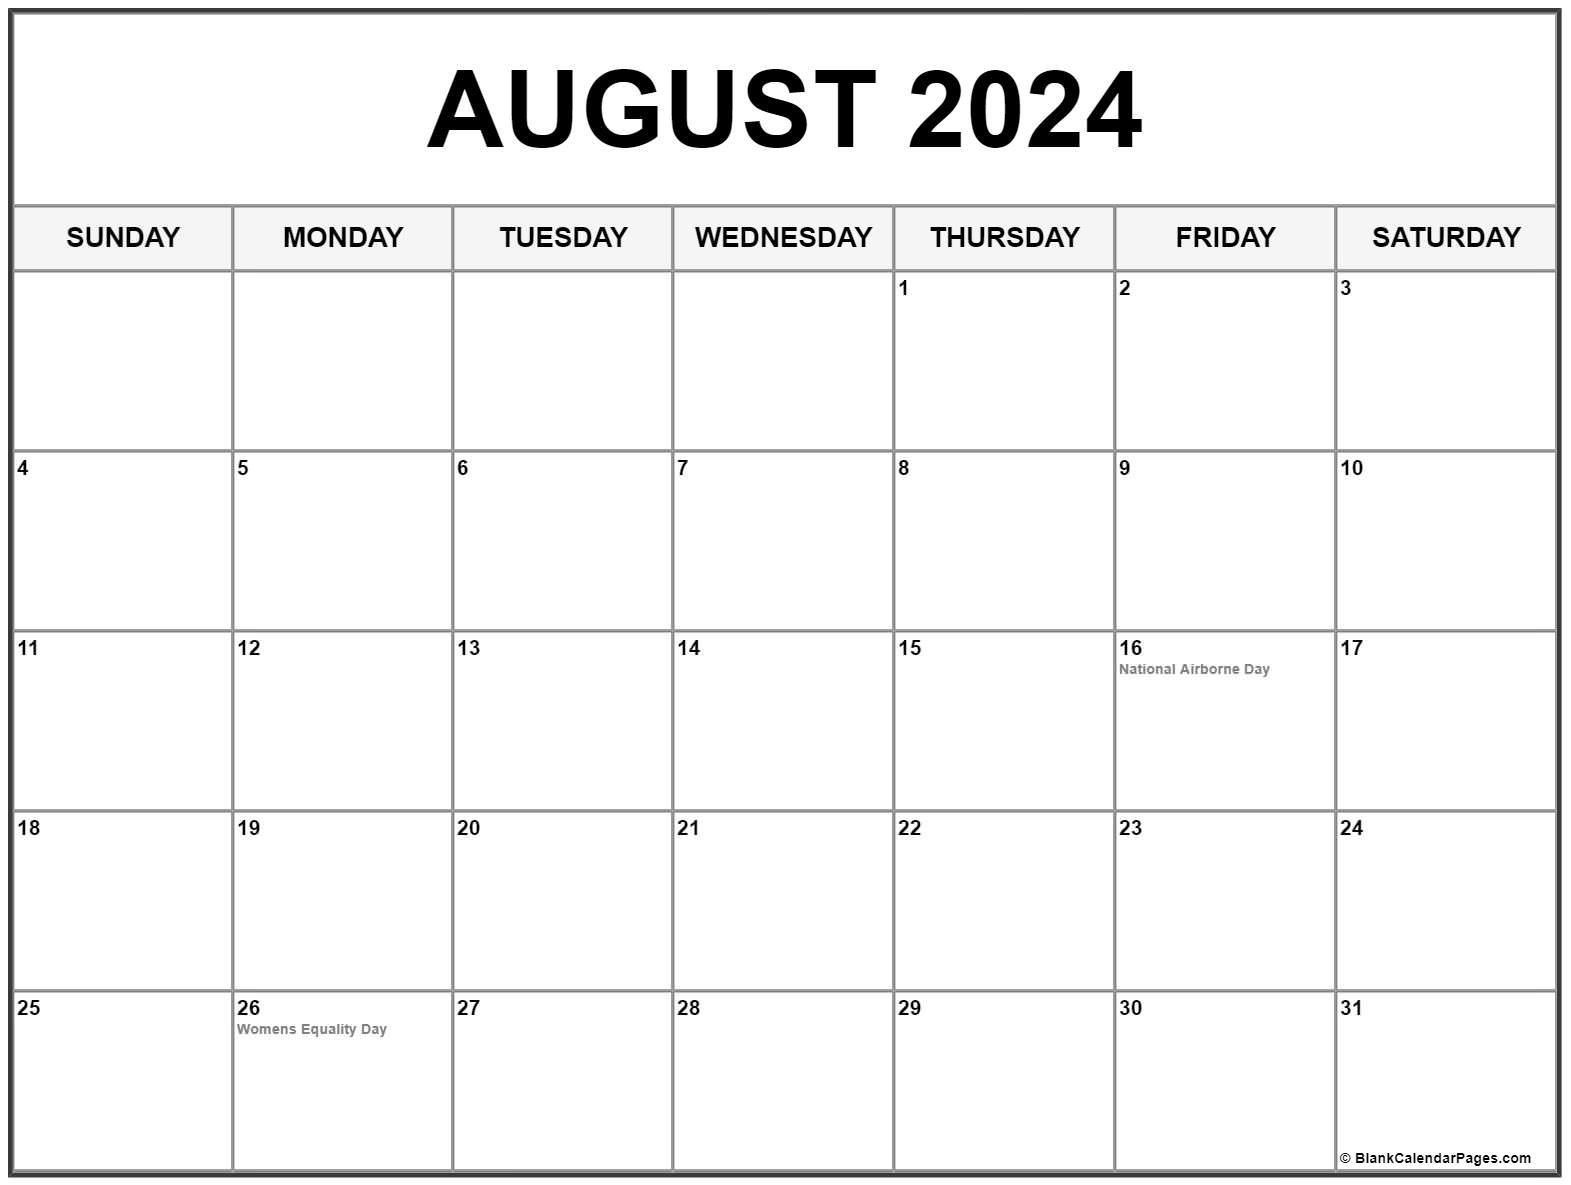 August 2022 calendar with holidays